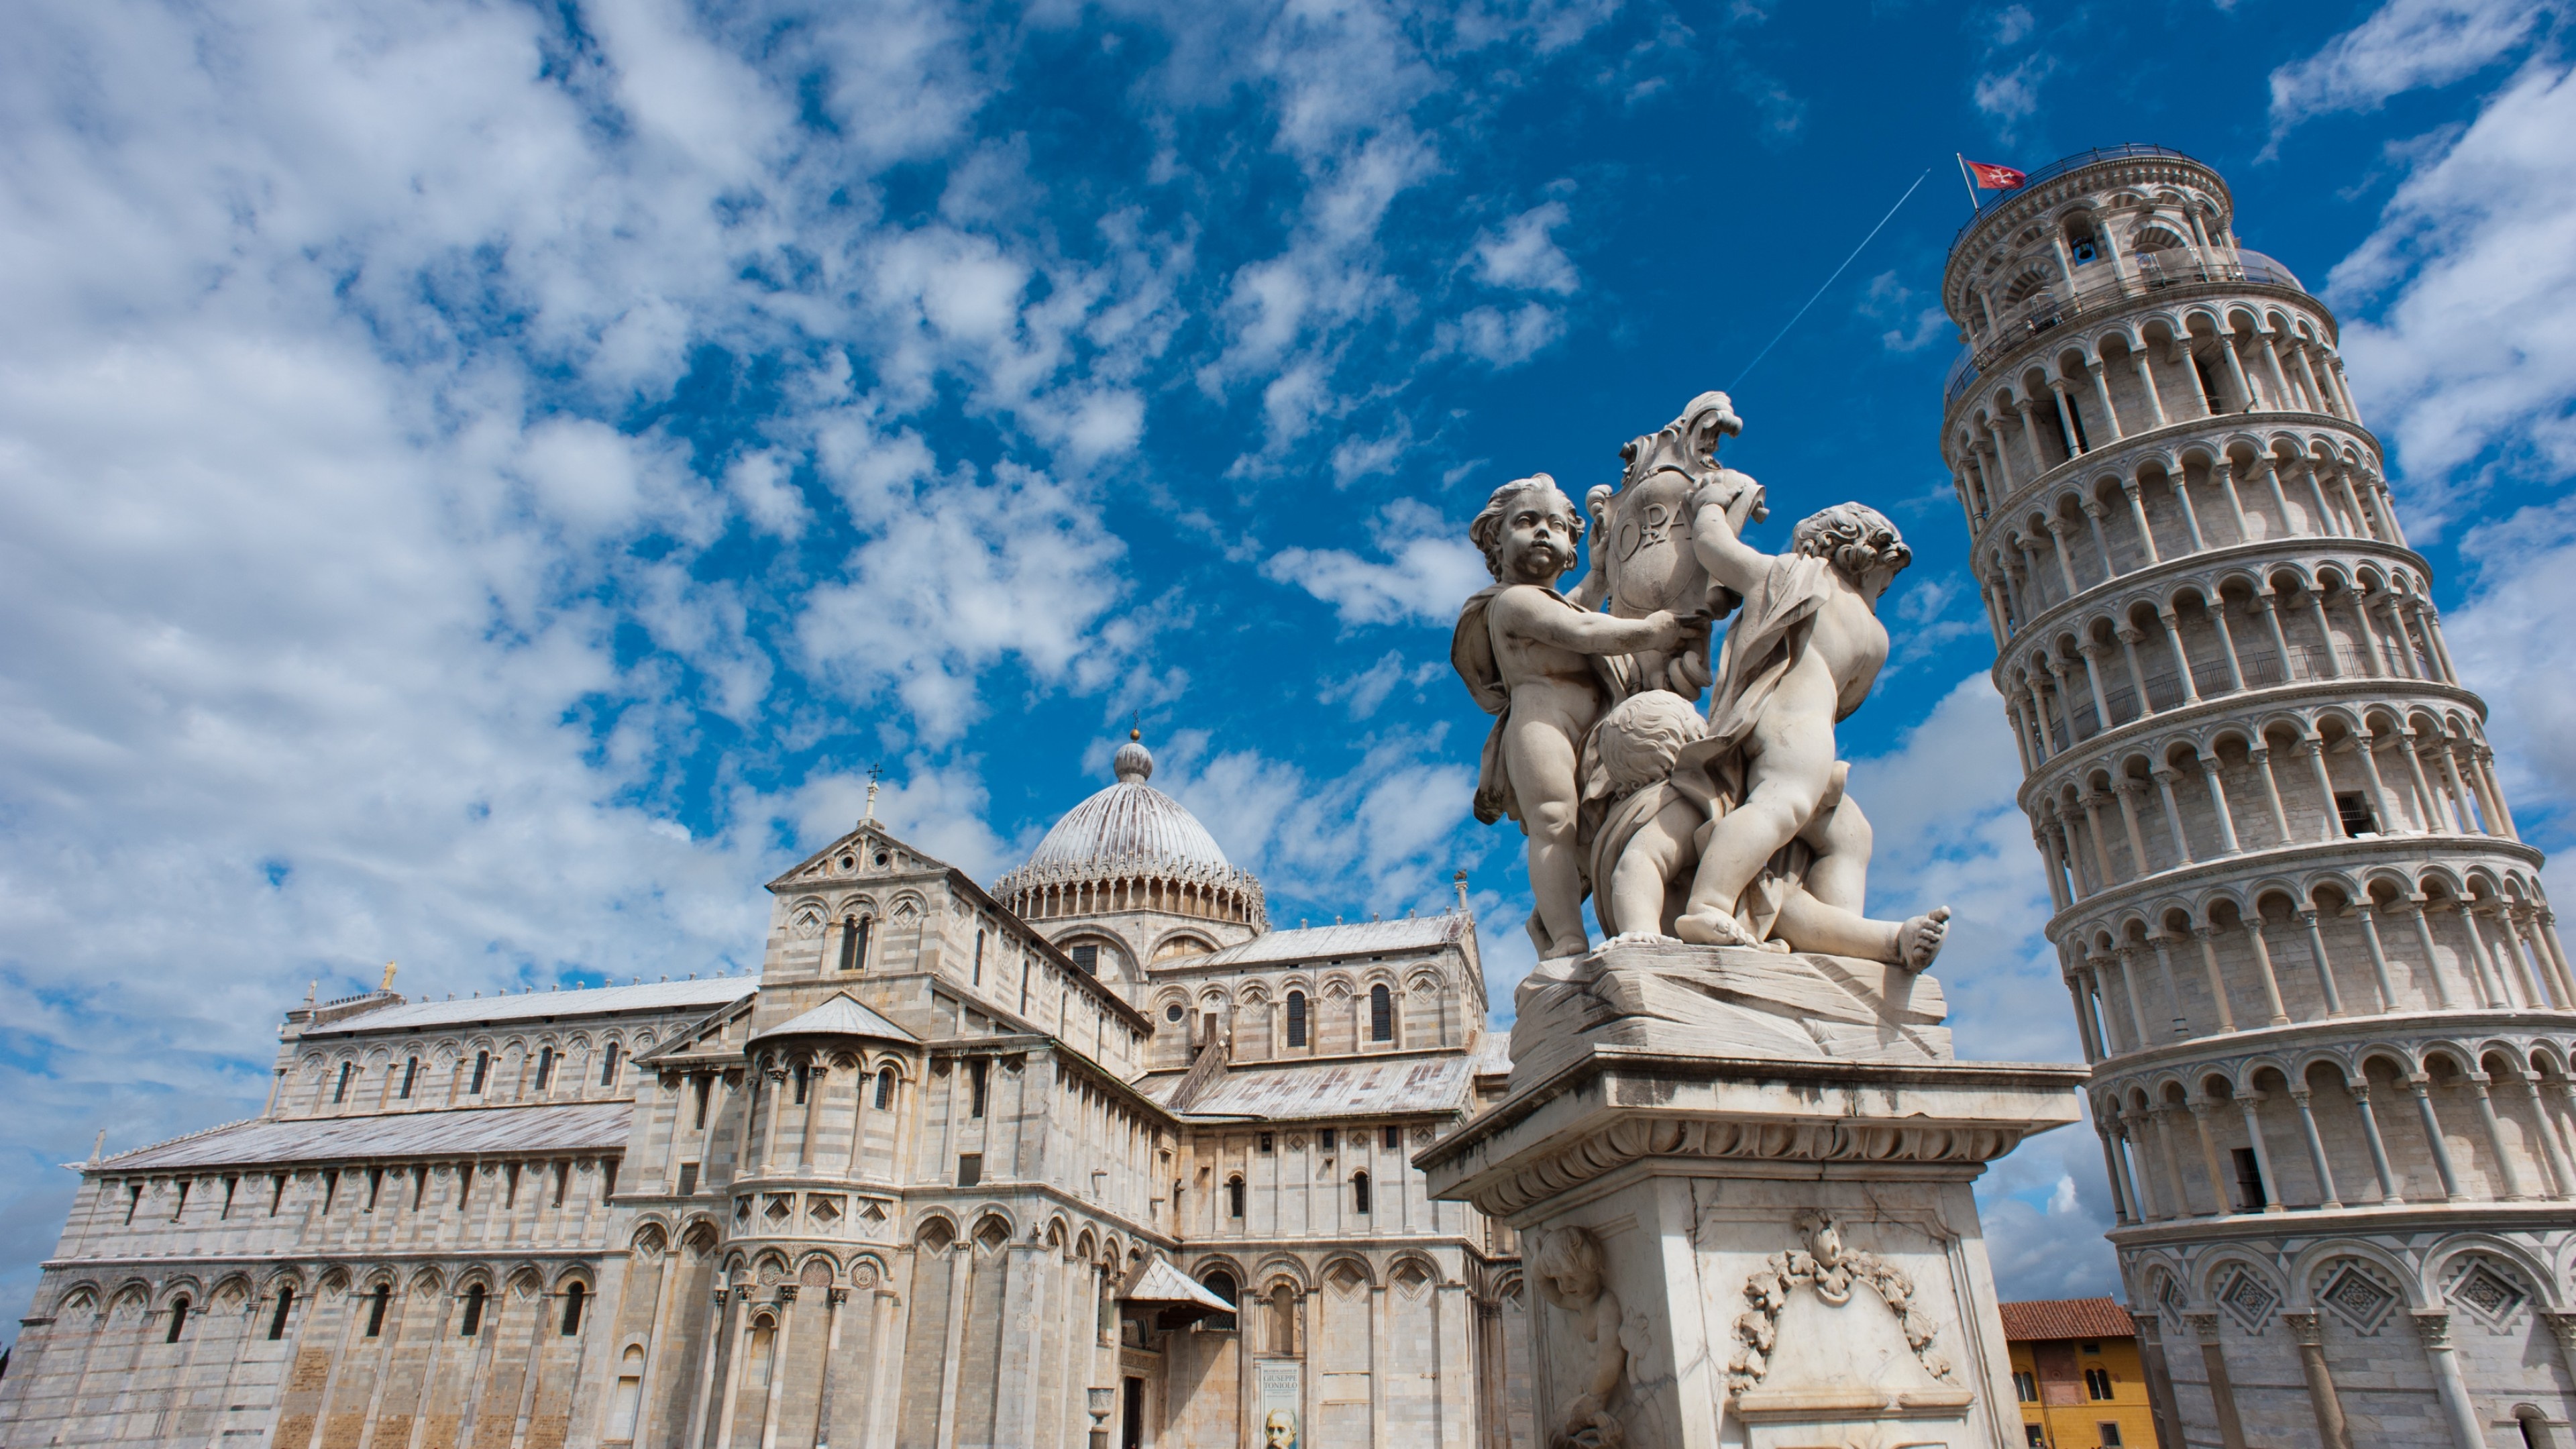 Leaning Tower of Pisa wallpaper, Architectural wonder, Travel inspiration, Italian heritage, 3840x2160 4K Desktop